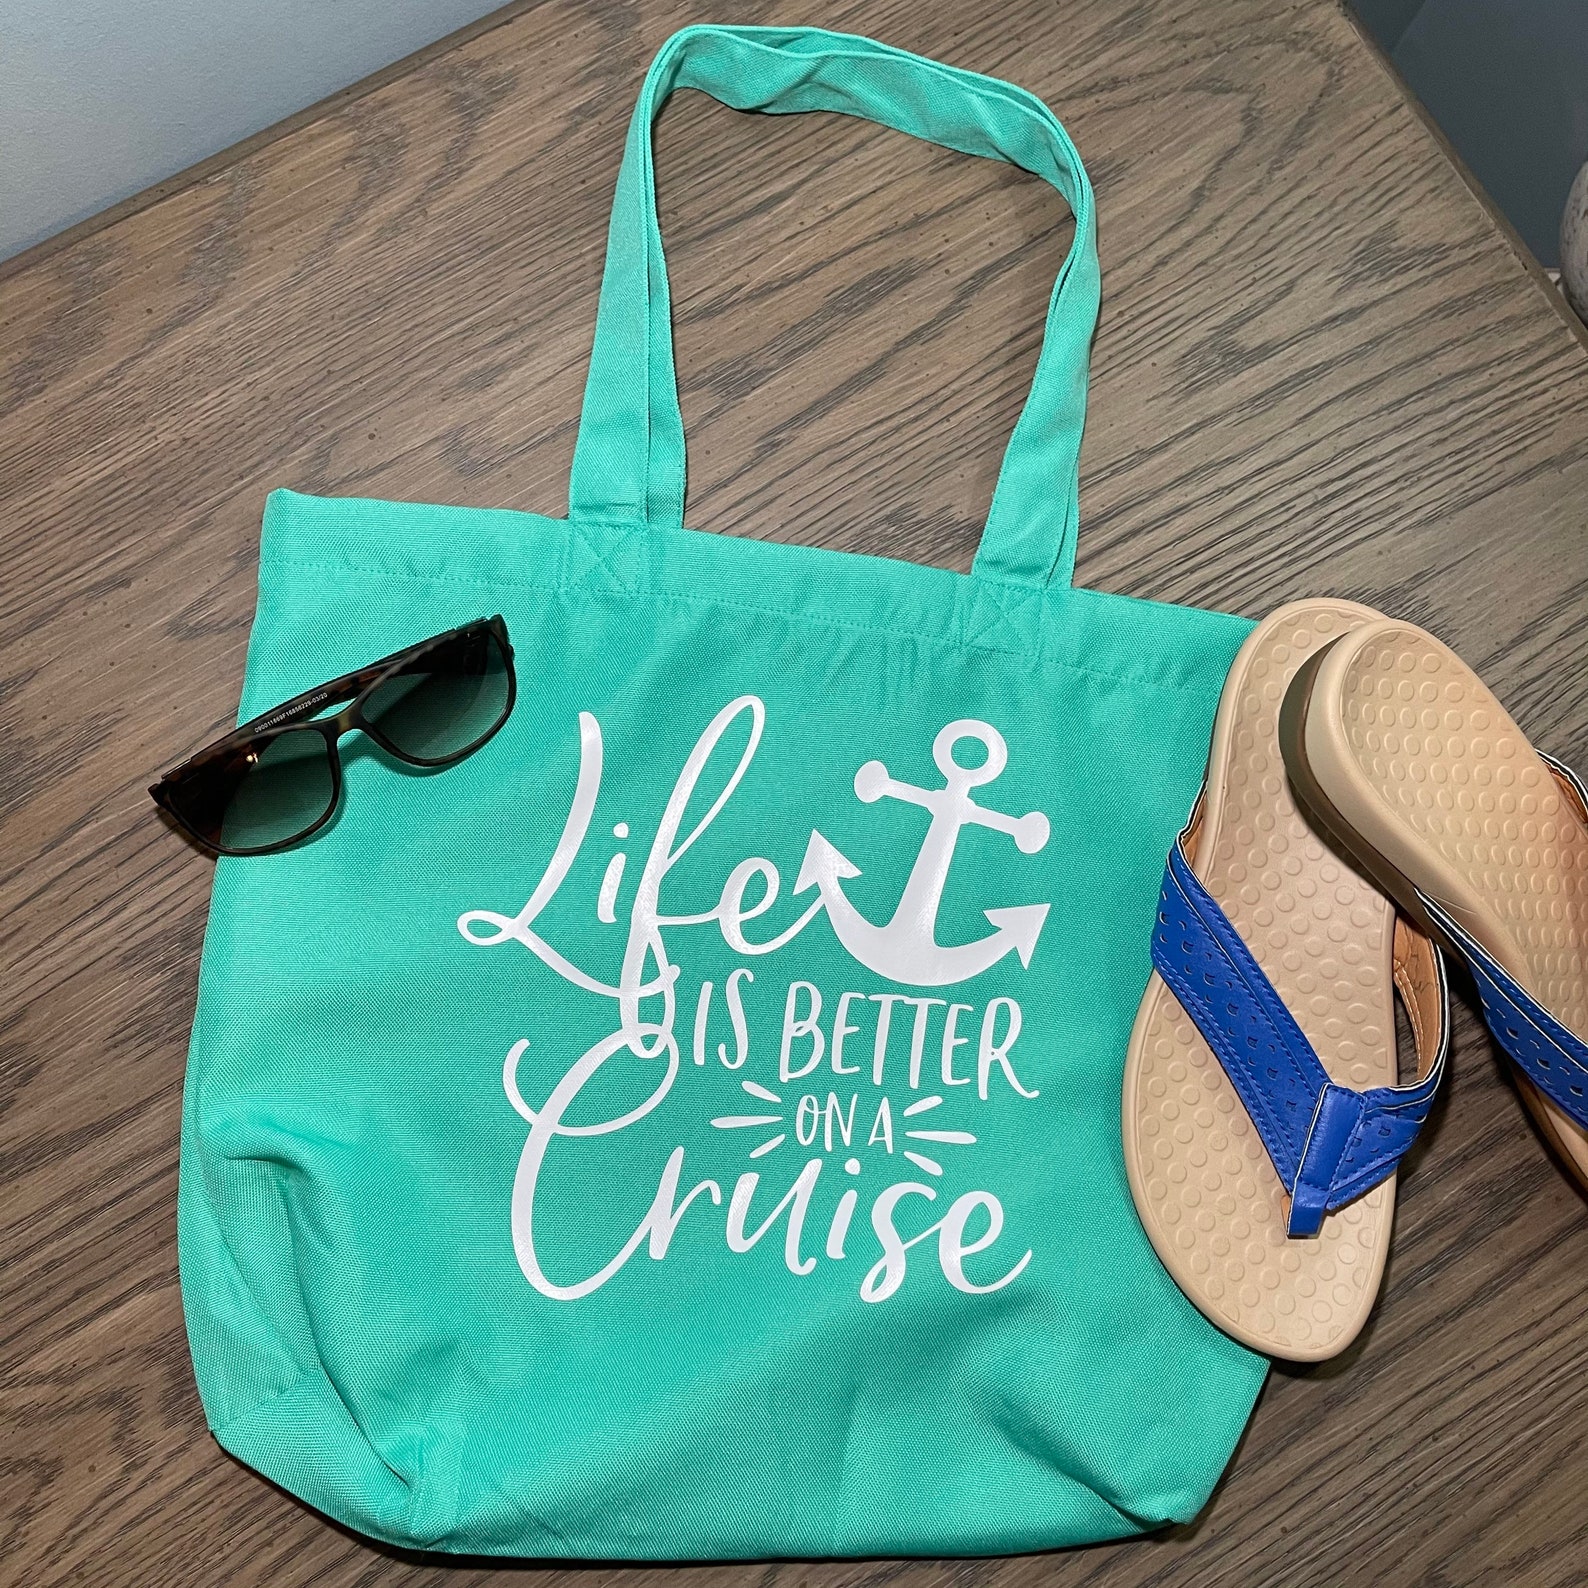 cruise themed gift bag